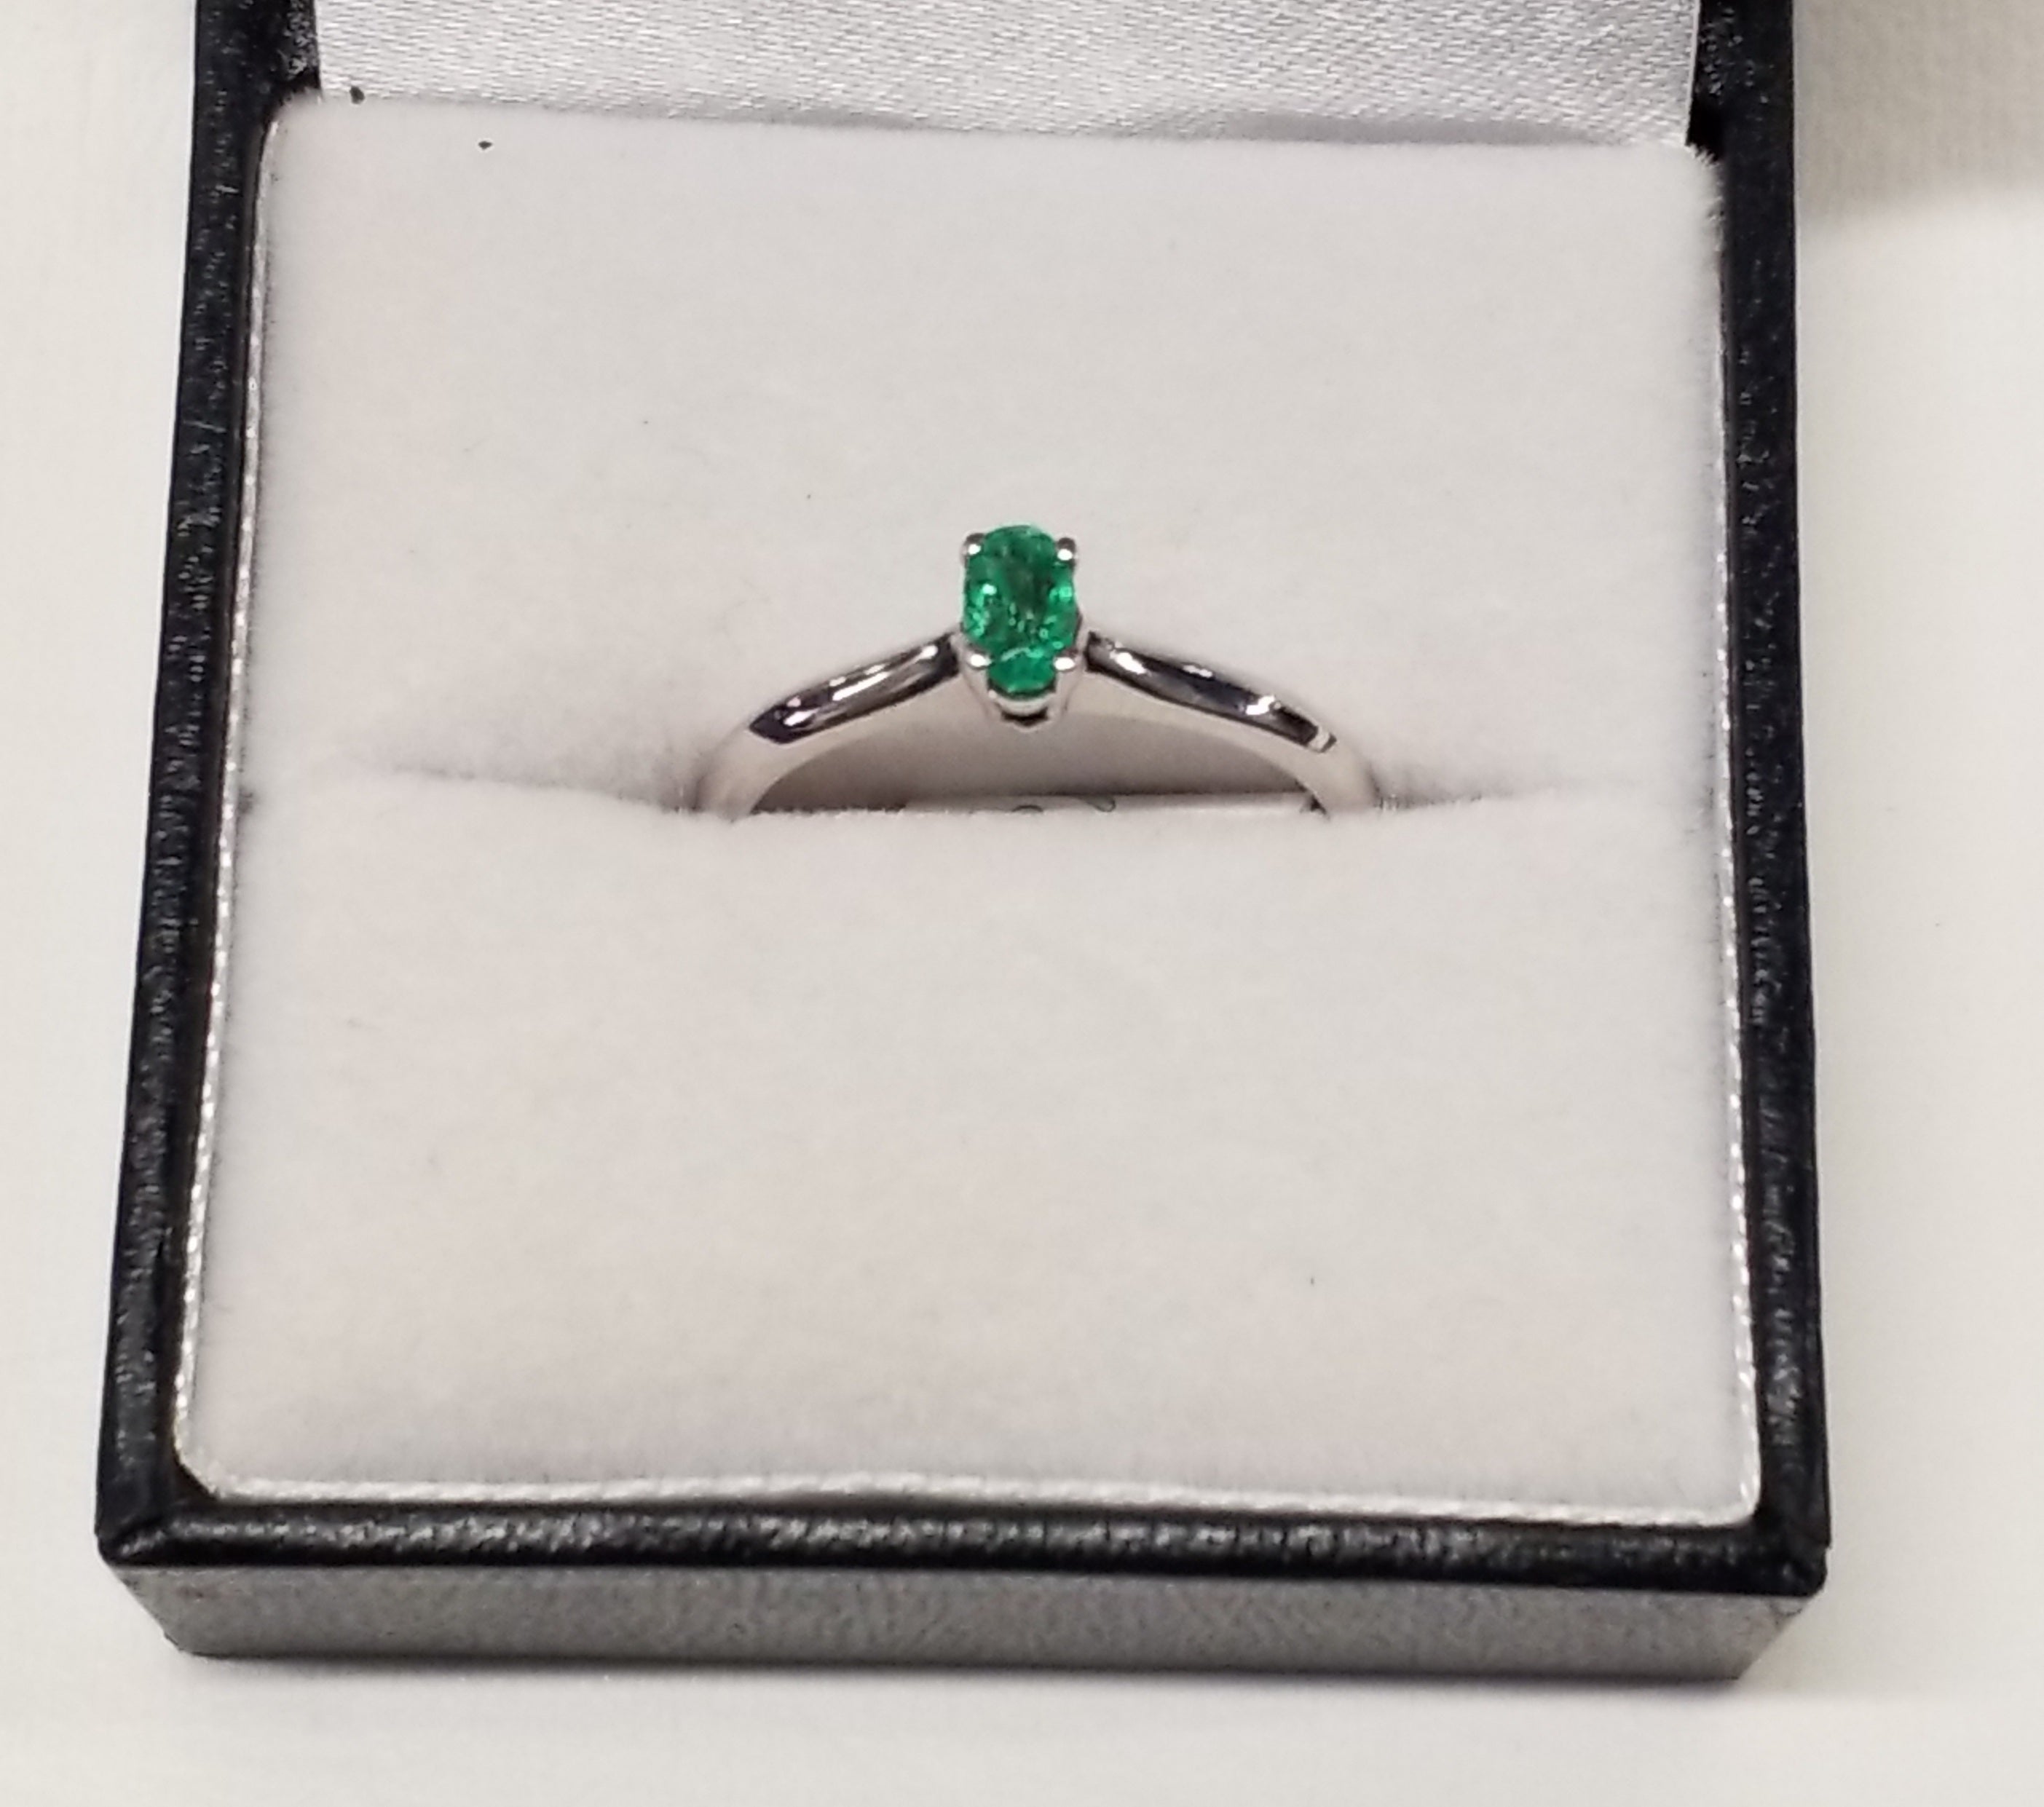 Oval Cut Emerald Ring